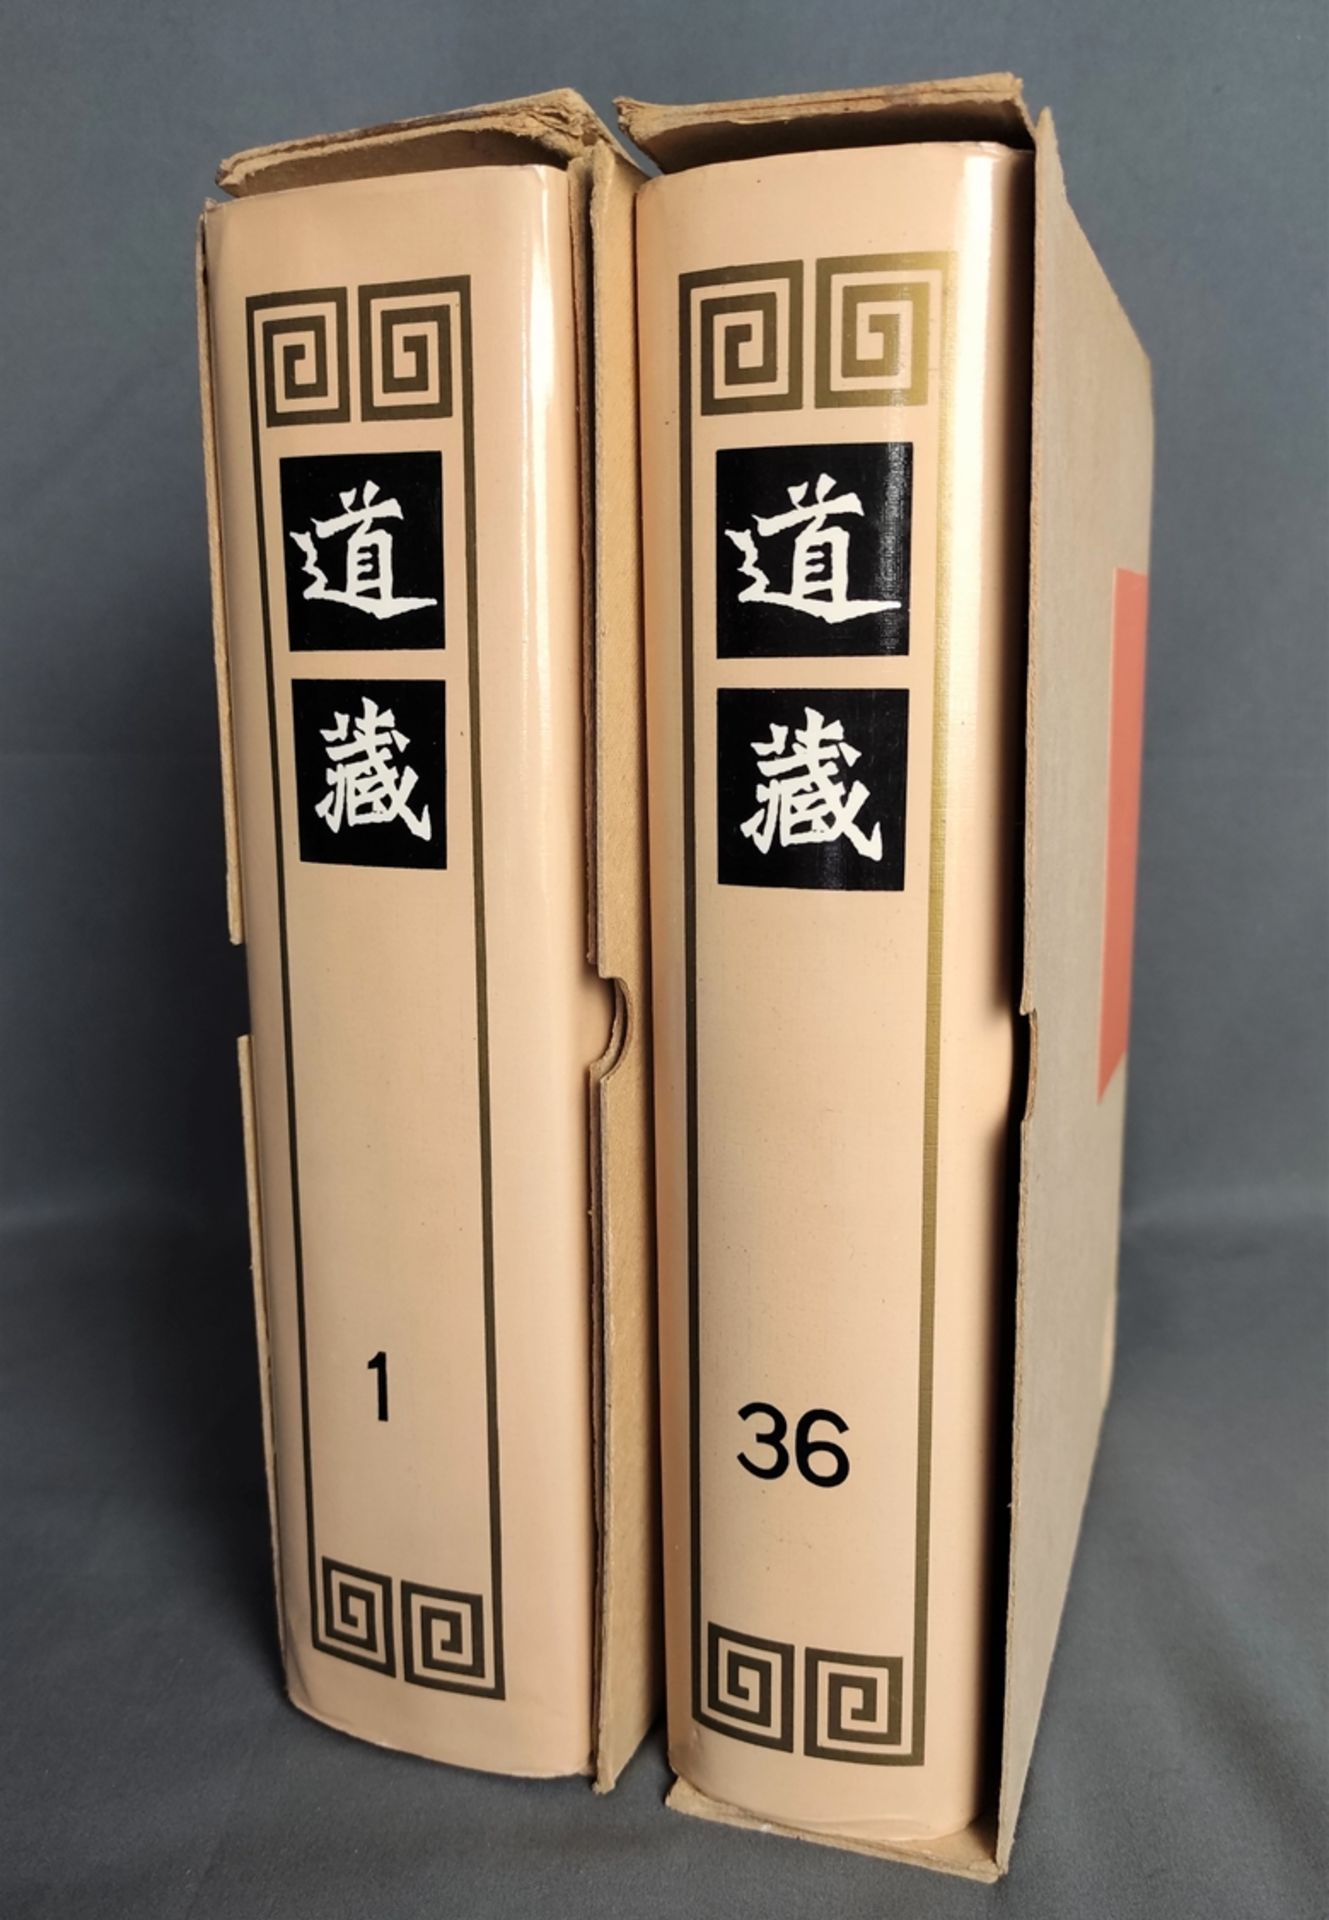 35 volumes "Dai Zang"/Taoism", each in slipcase, volume 2 missing, 1988, Beijing: Wen wu chu ban sh - Image 2 of 2